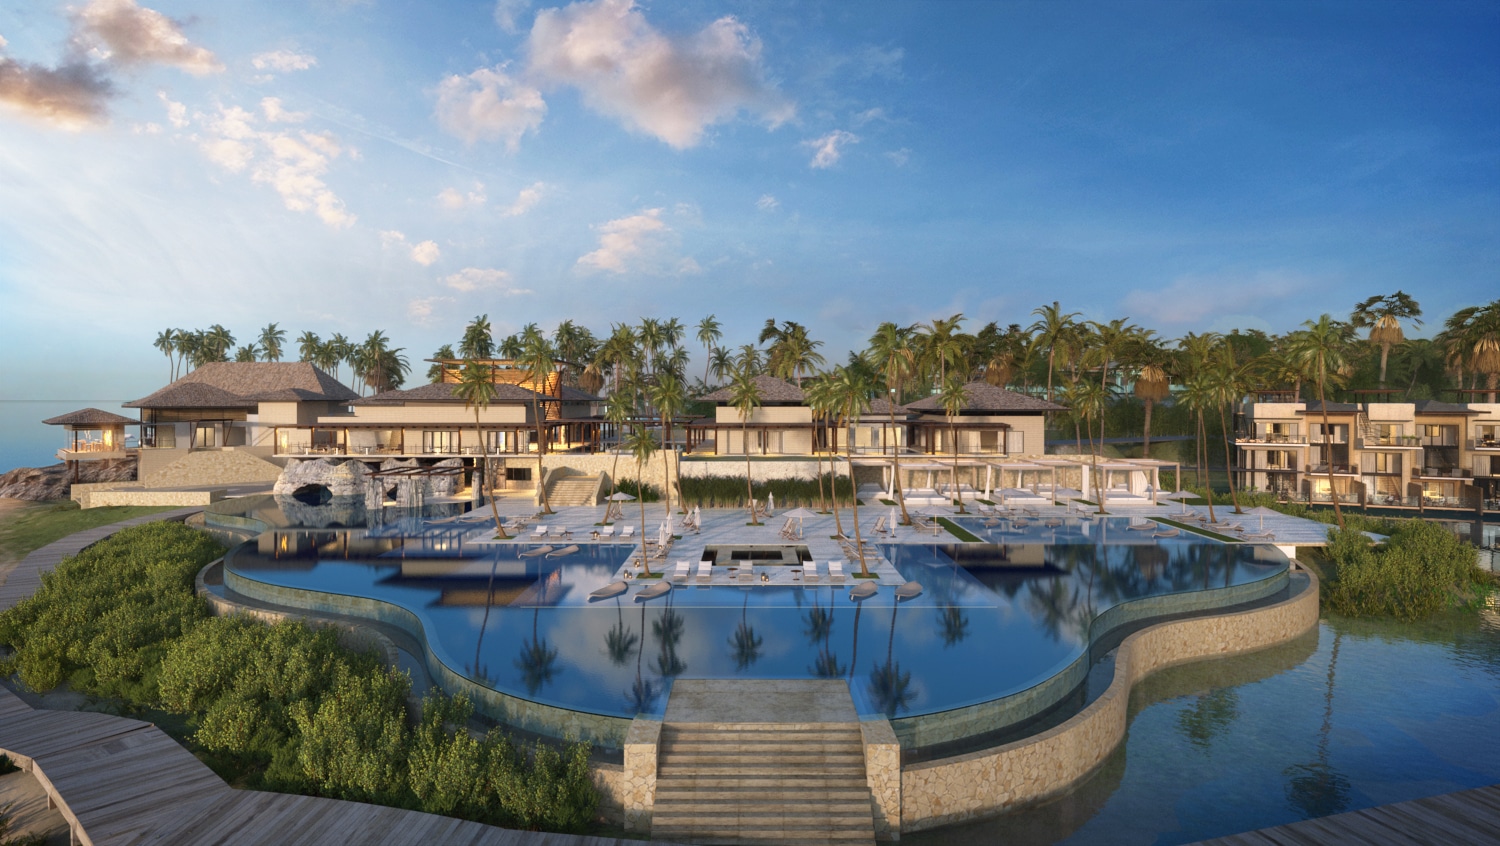 New Overwater Bungalow Resorts | Viceroy Bocas del Toro Panama